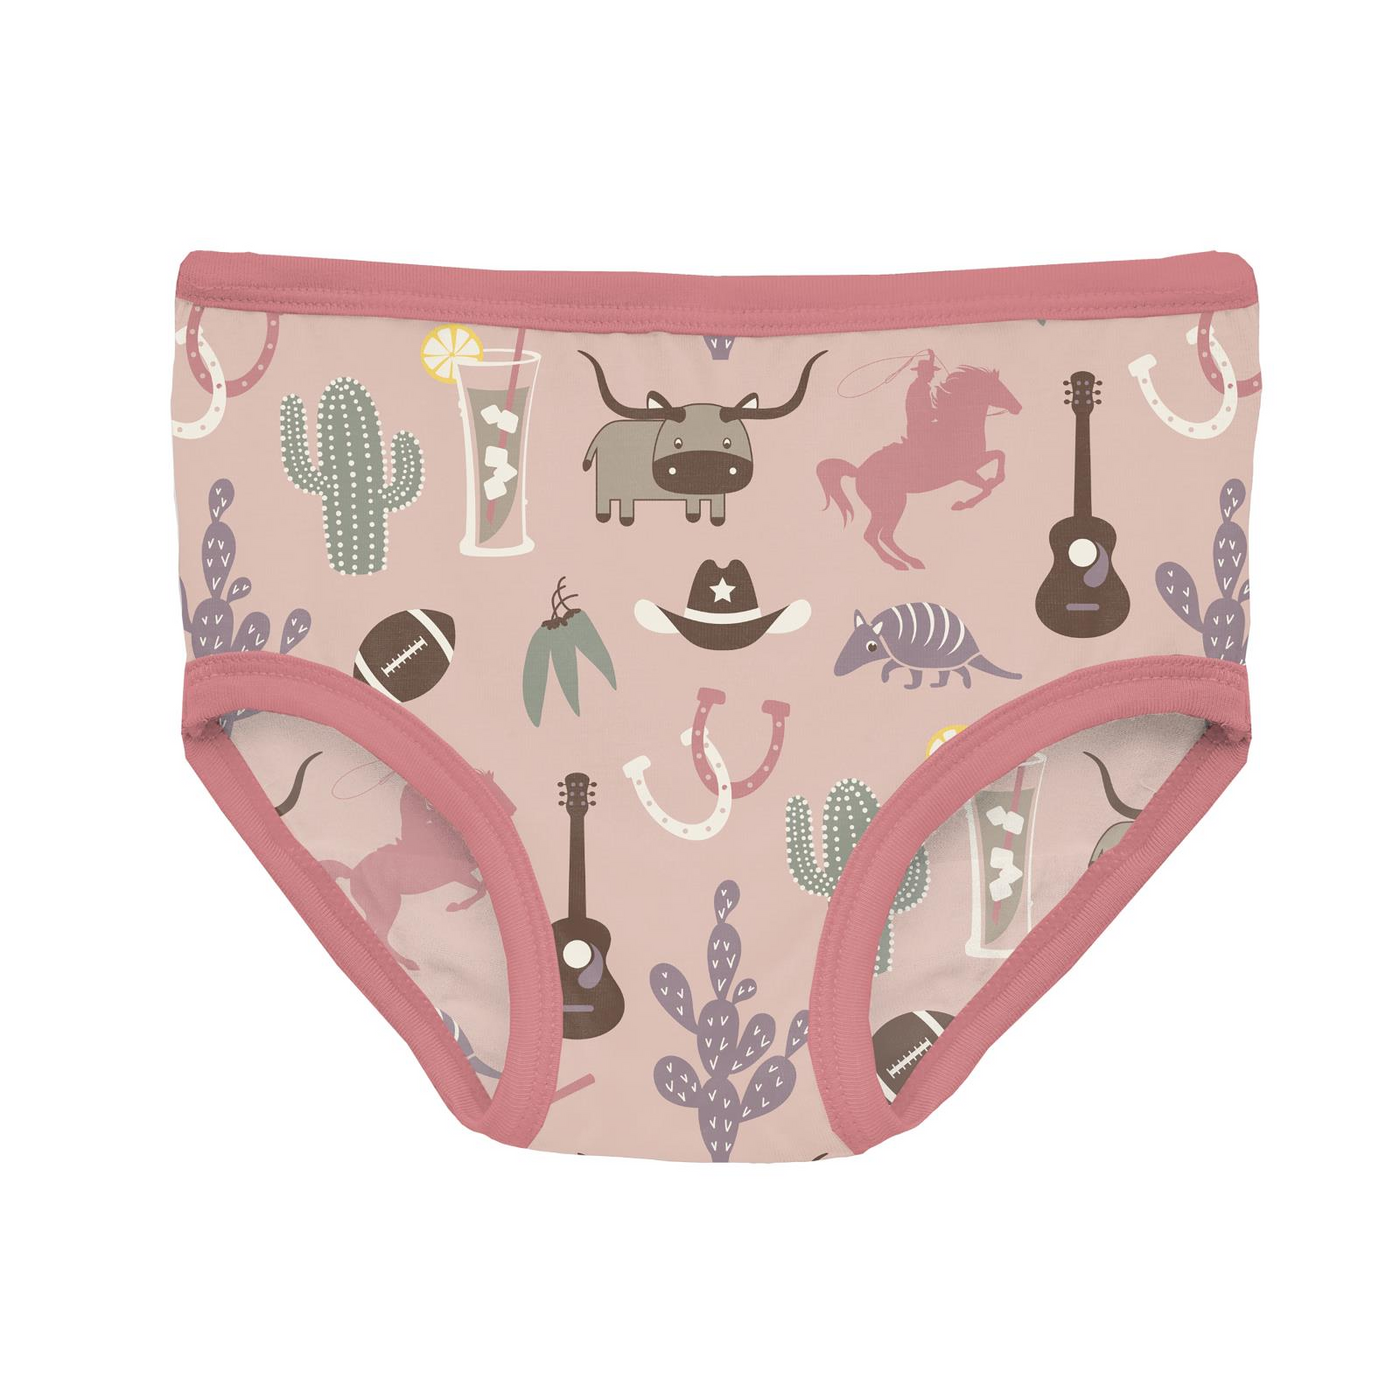 Kickee Pants Girl's Underwear: Peach Blossom Rodeo